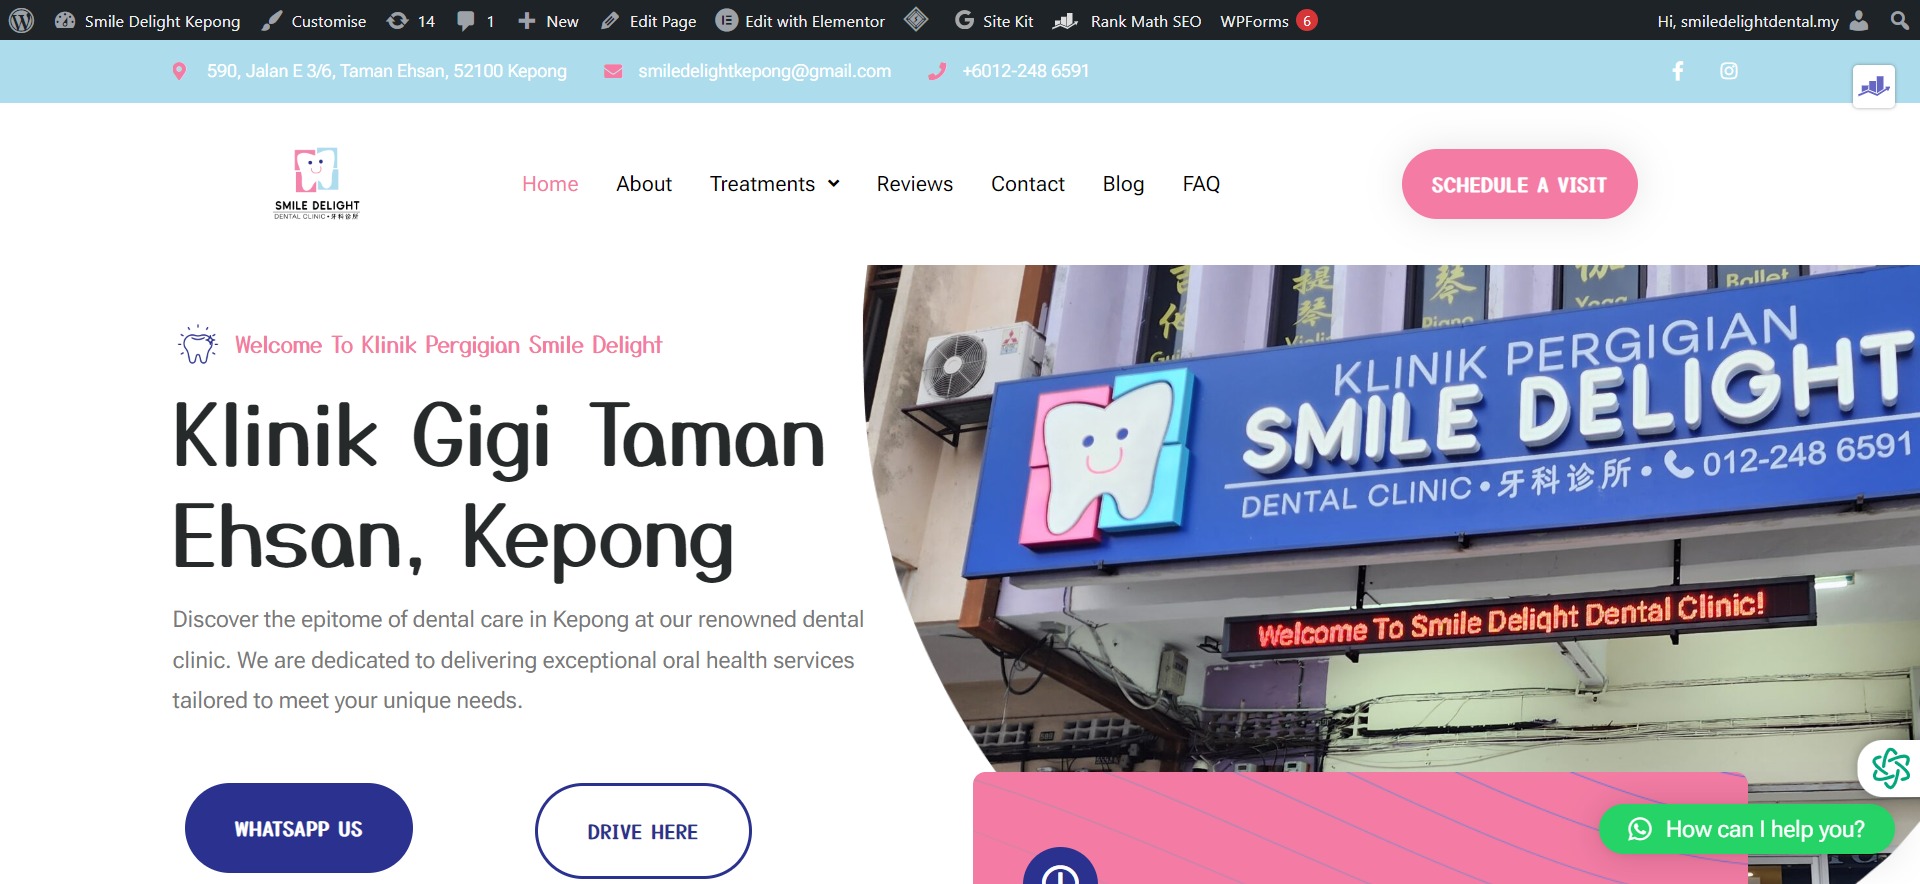 Screen Capture 1450 Klinik Gigi Taman Ehsan Kepong Dentist Smile Delight smiledelightdental.my